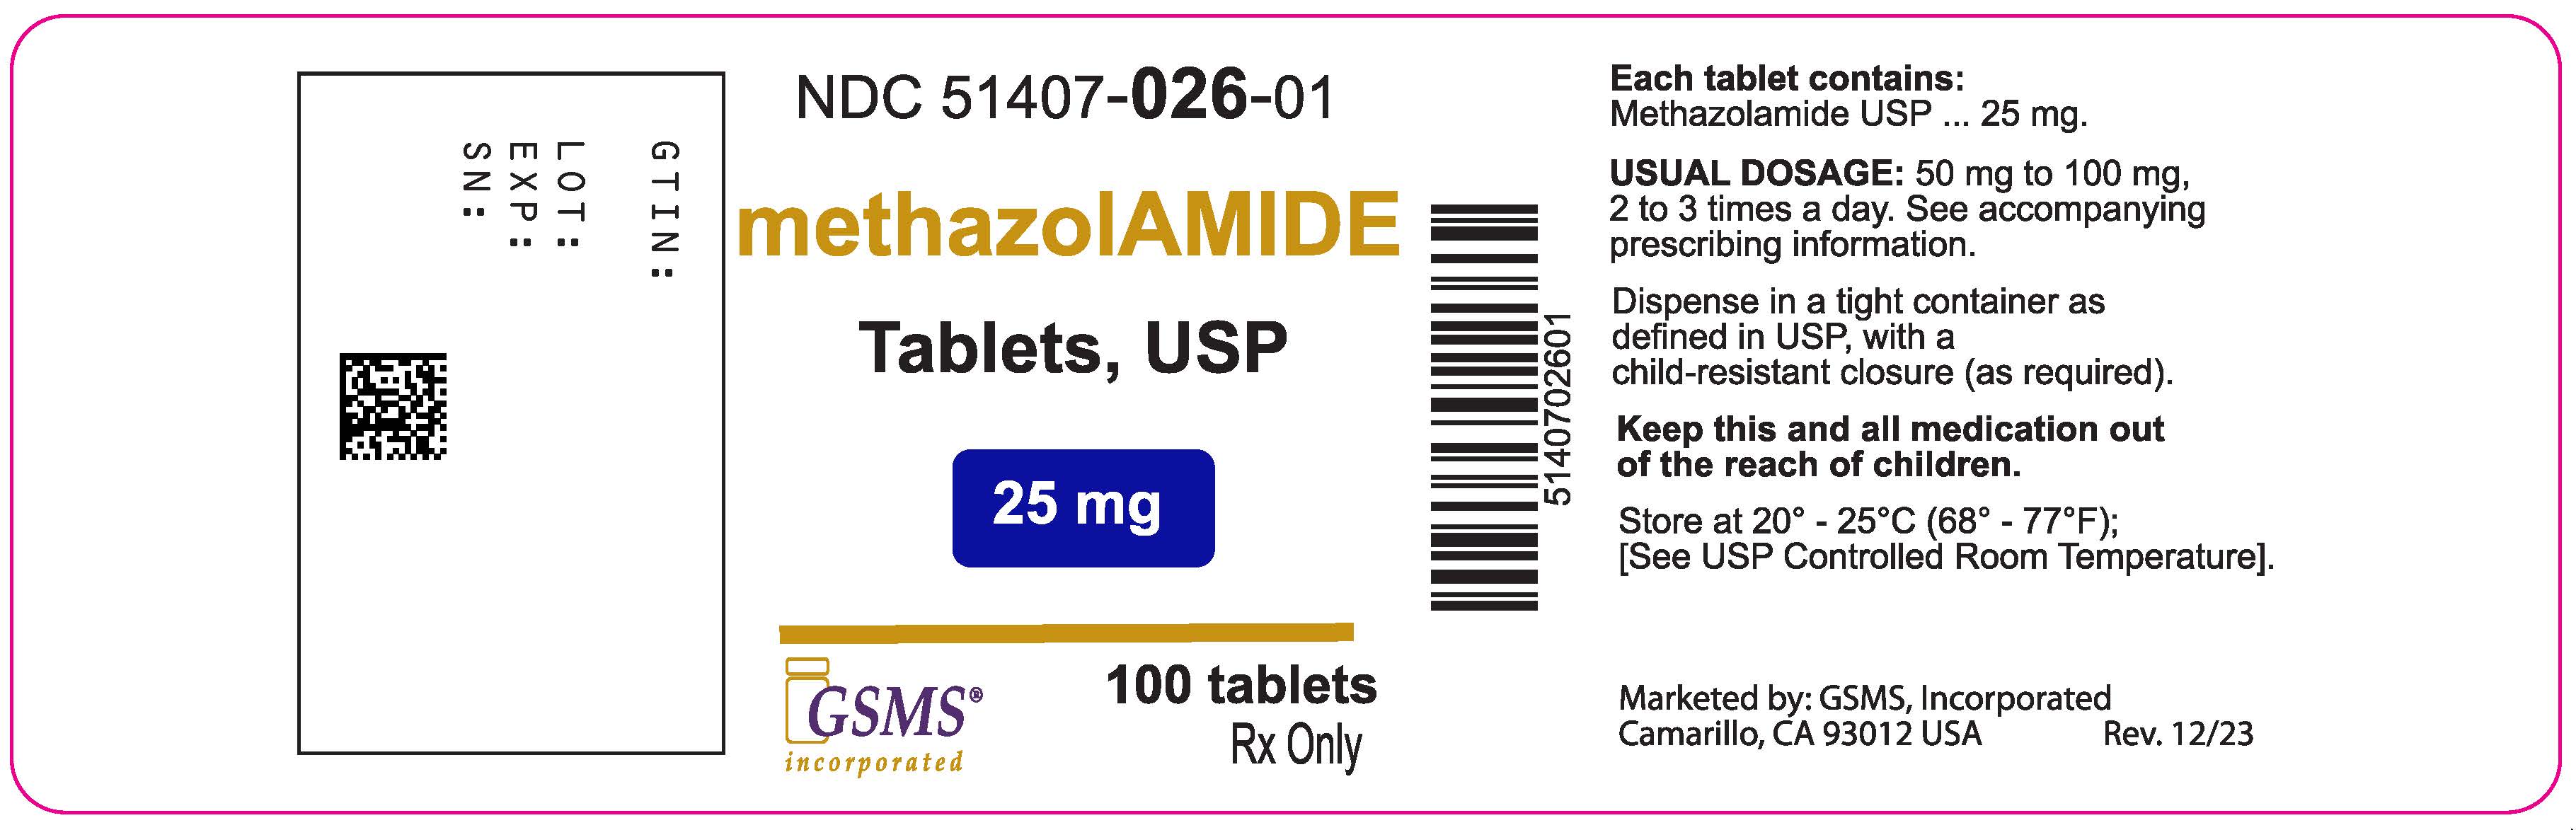 51407-026-01OL - Methazolamide 25 mg - Rev. 1223.jpg